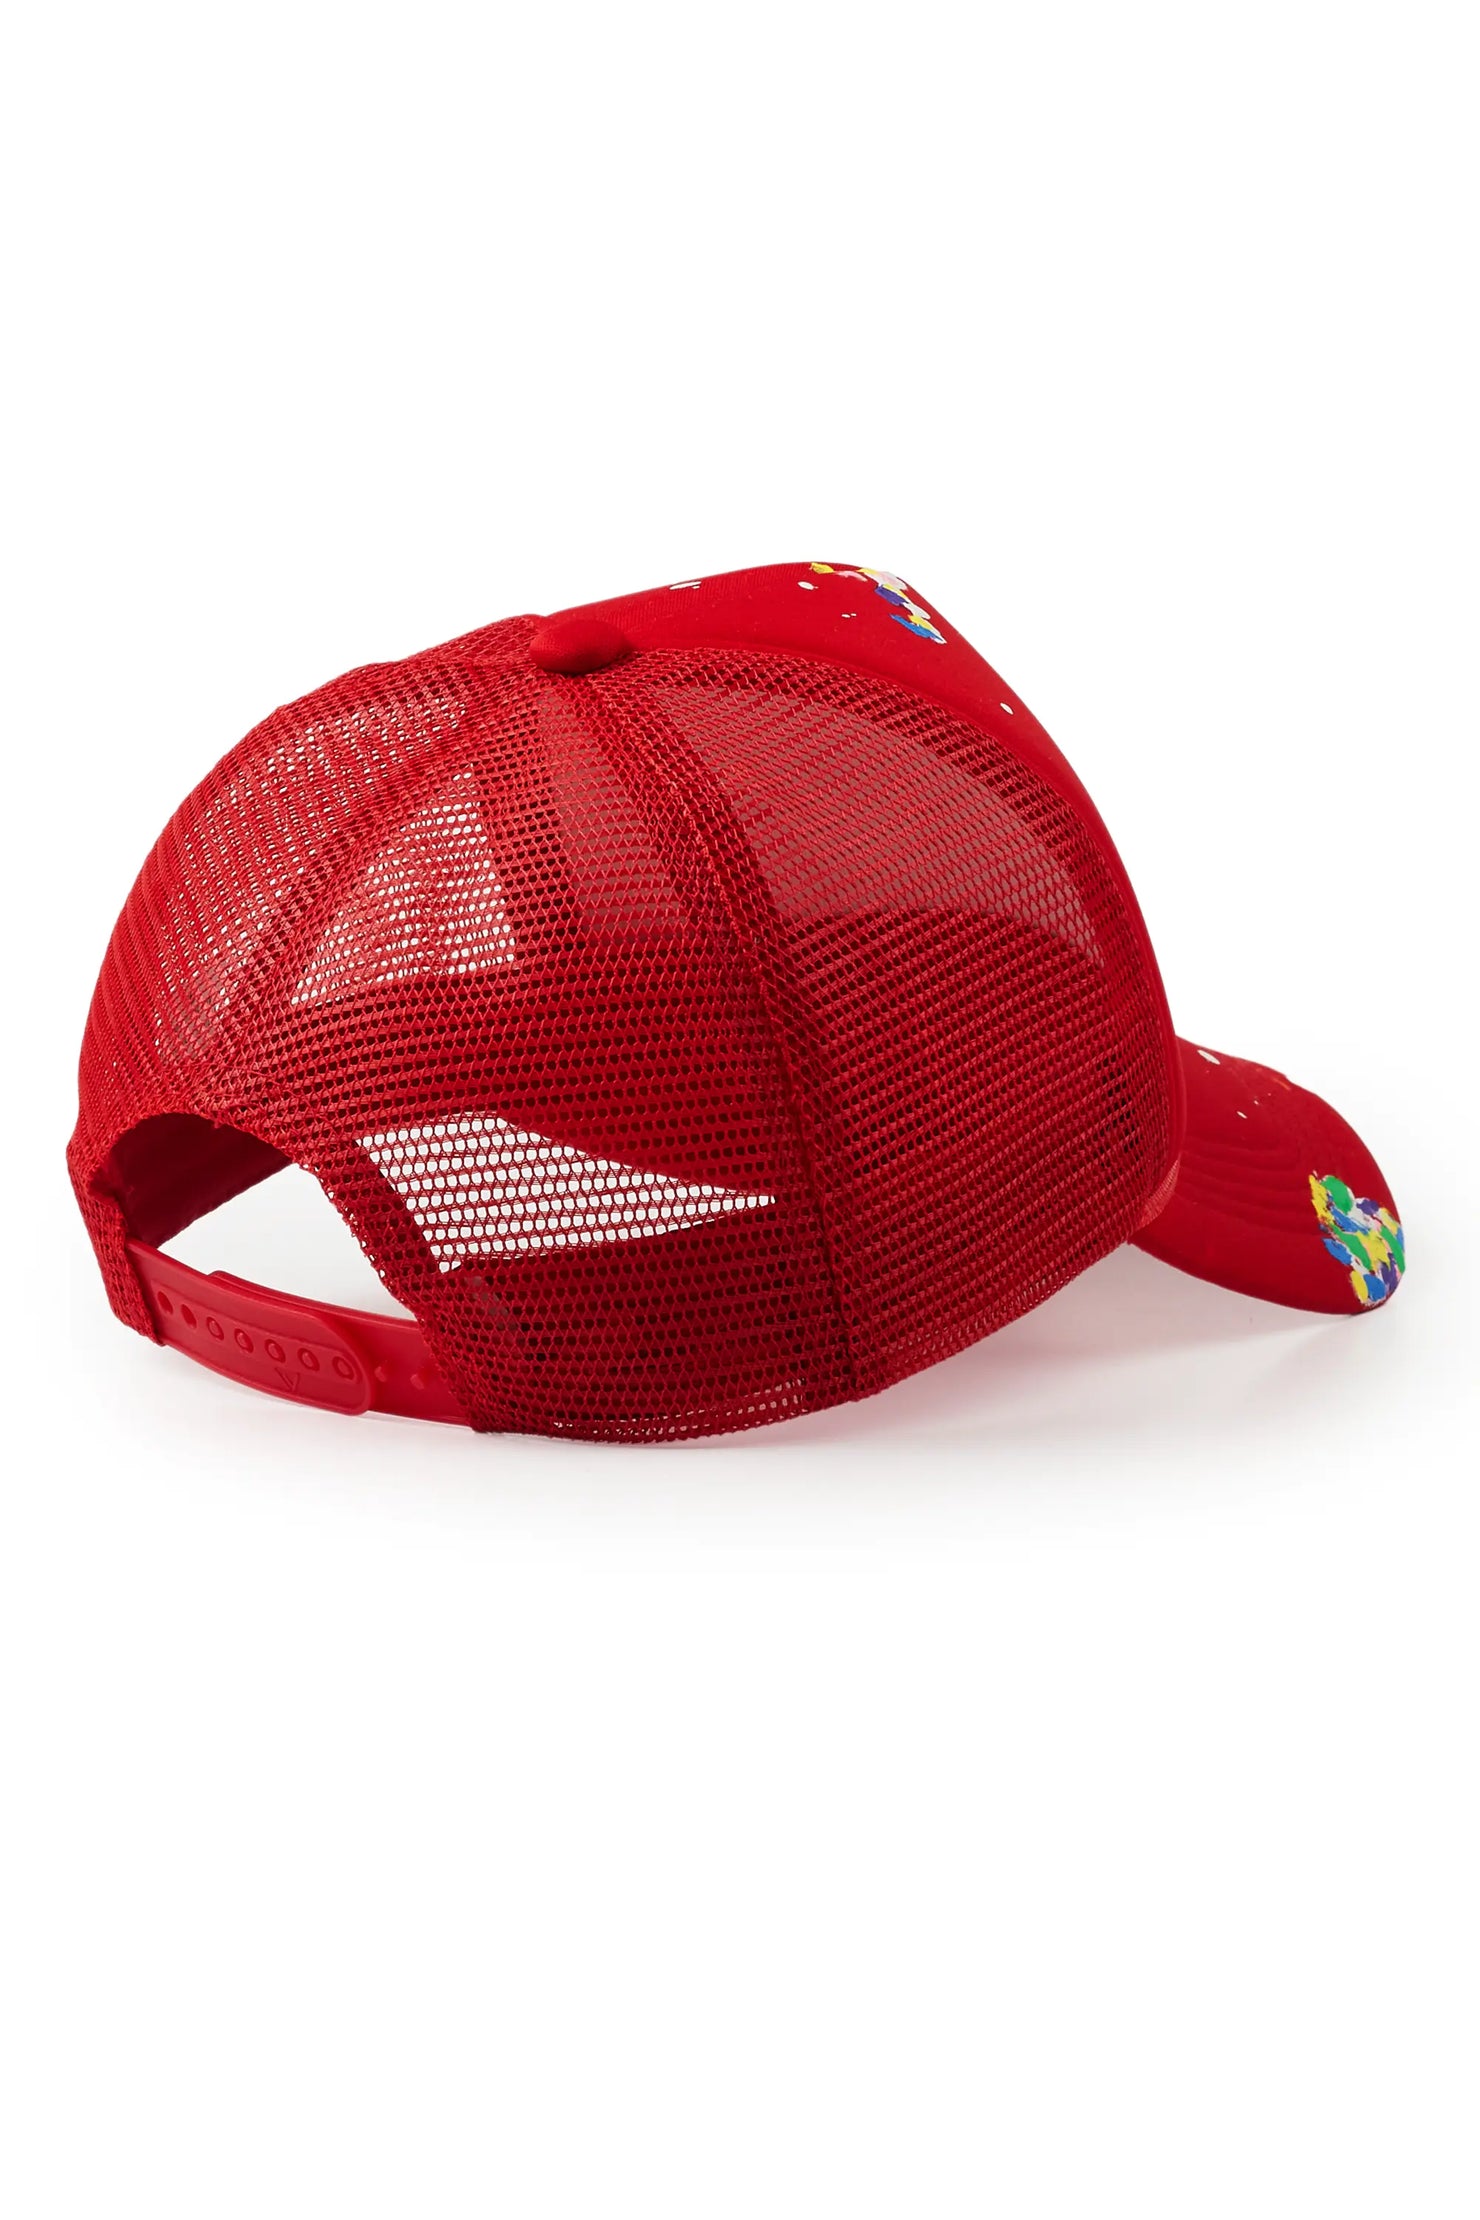 Tanko Red Graphic Trucker Hat